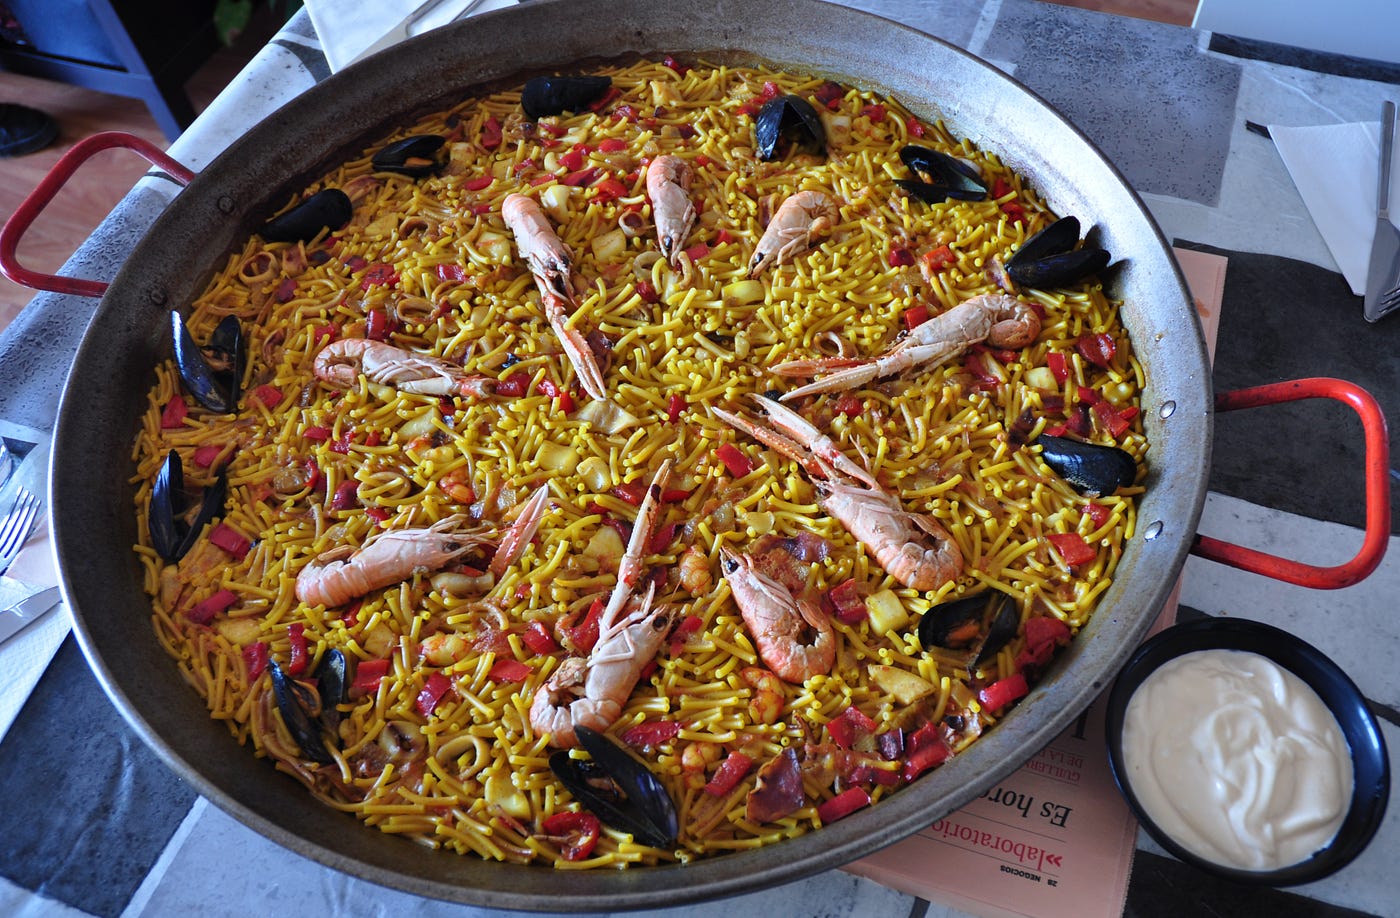 Traditional cuisine can also be daring - Essencia Barceloneta